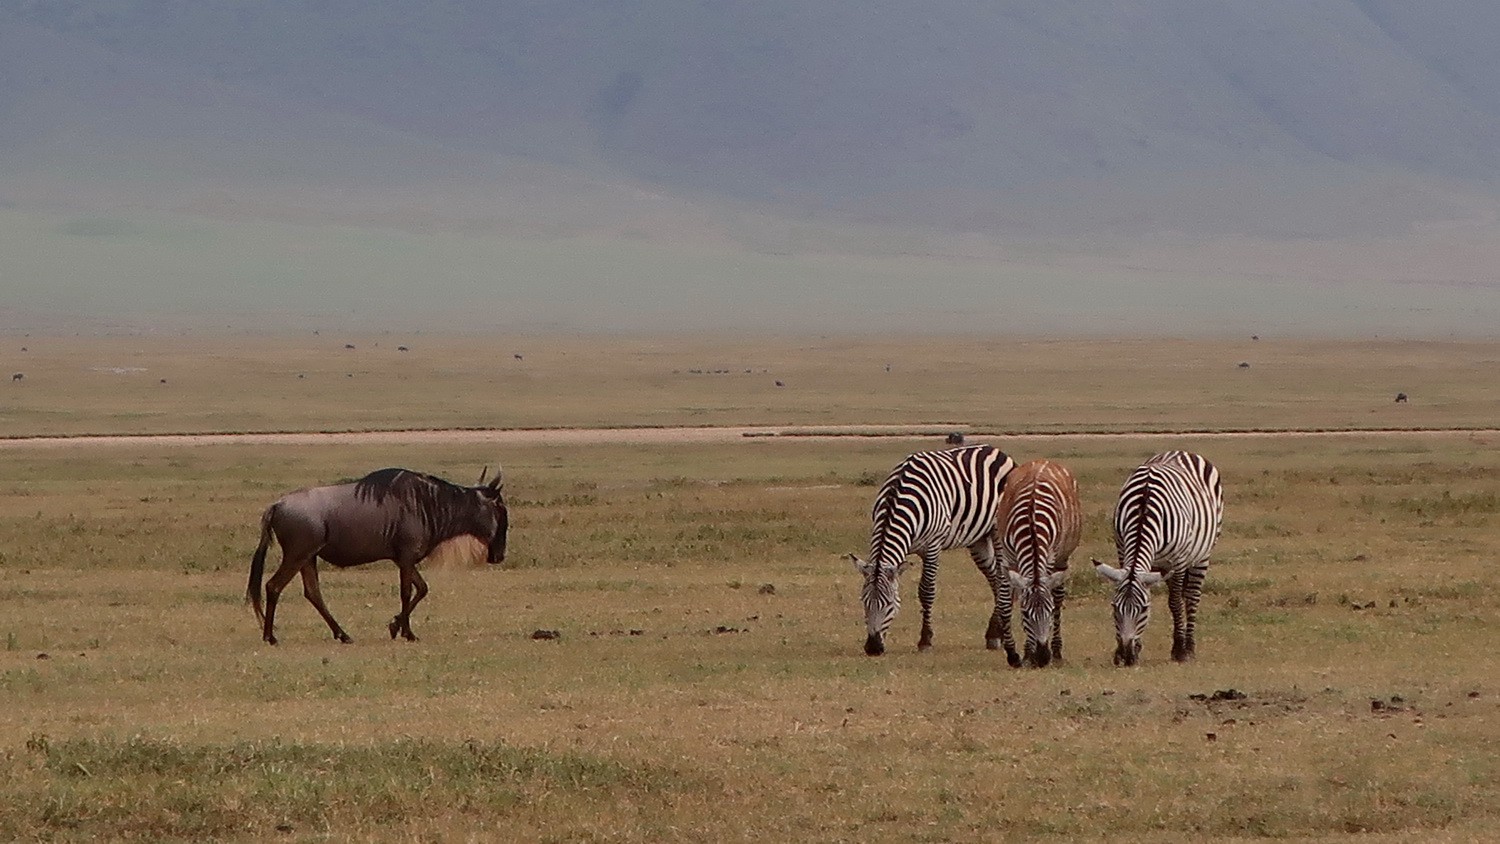 Wildebeest with Zebras in the bottom of Ngorongoro Crater